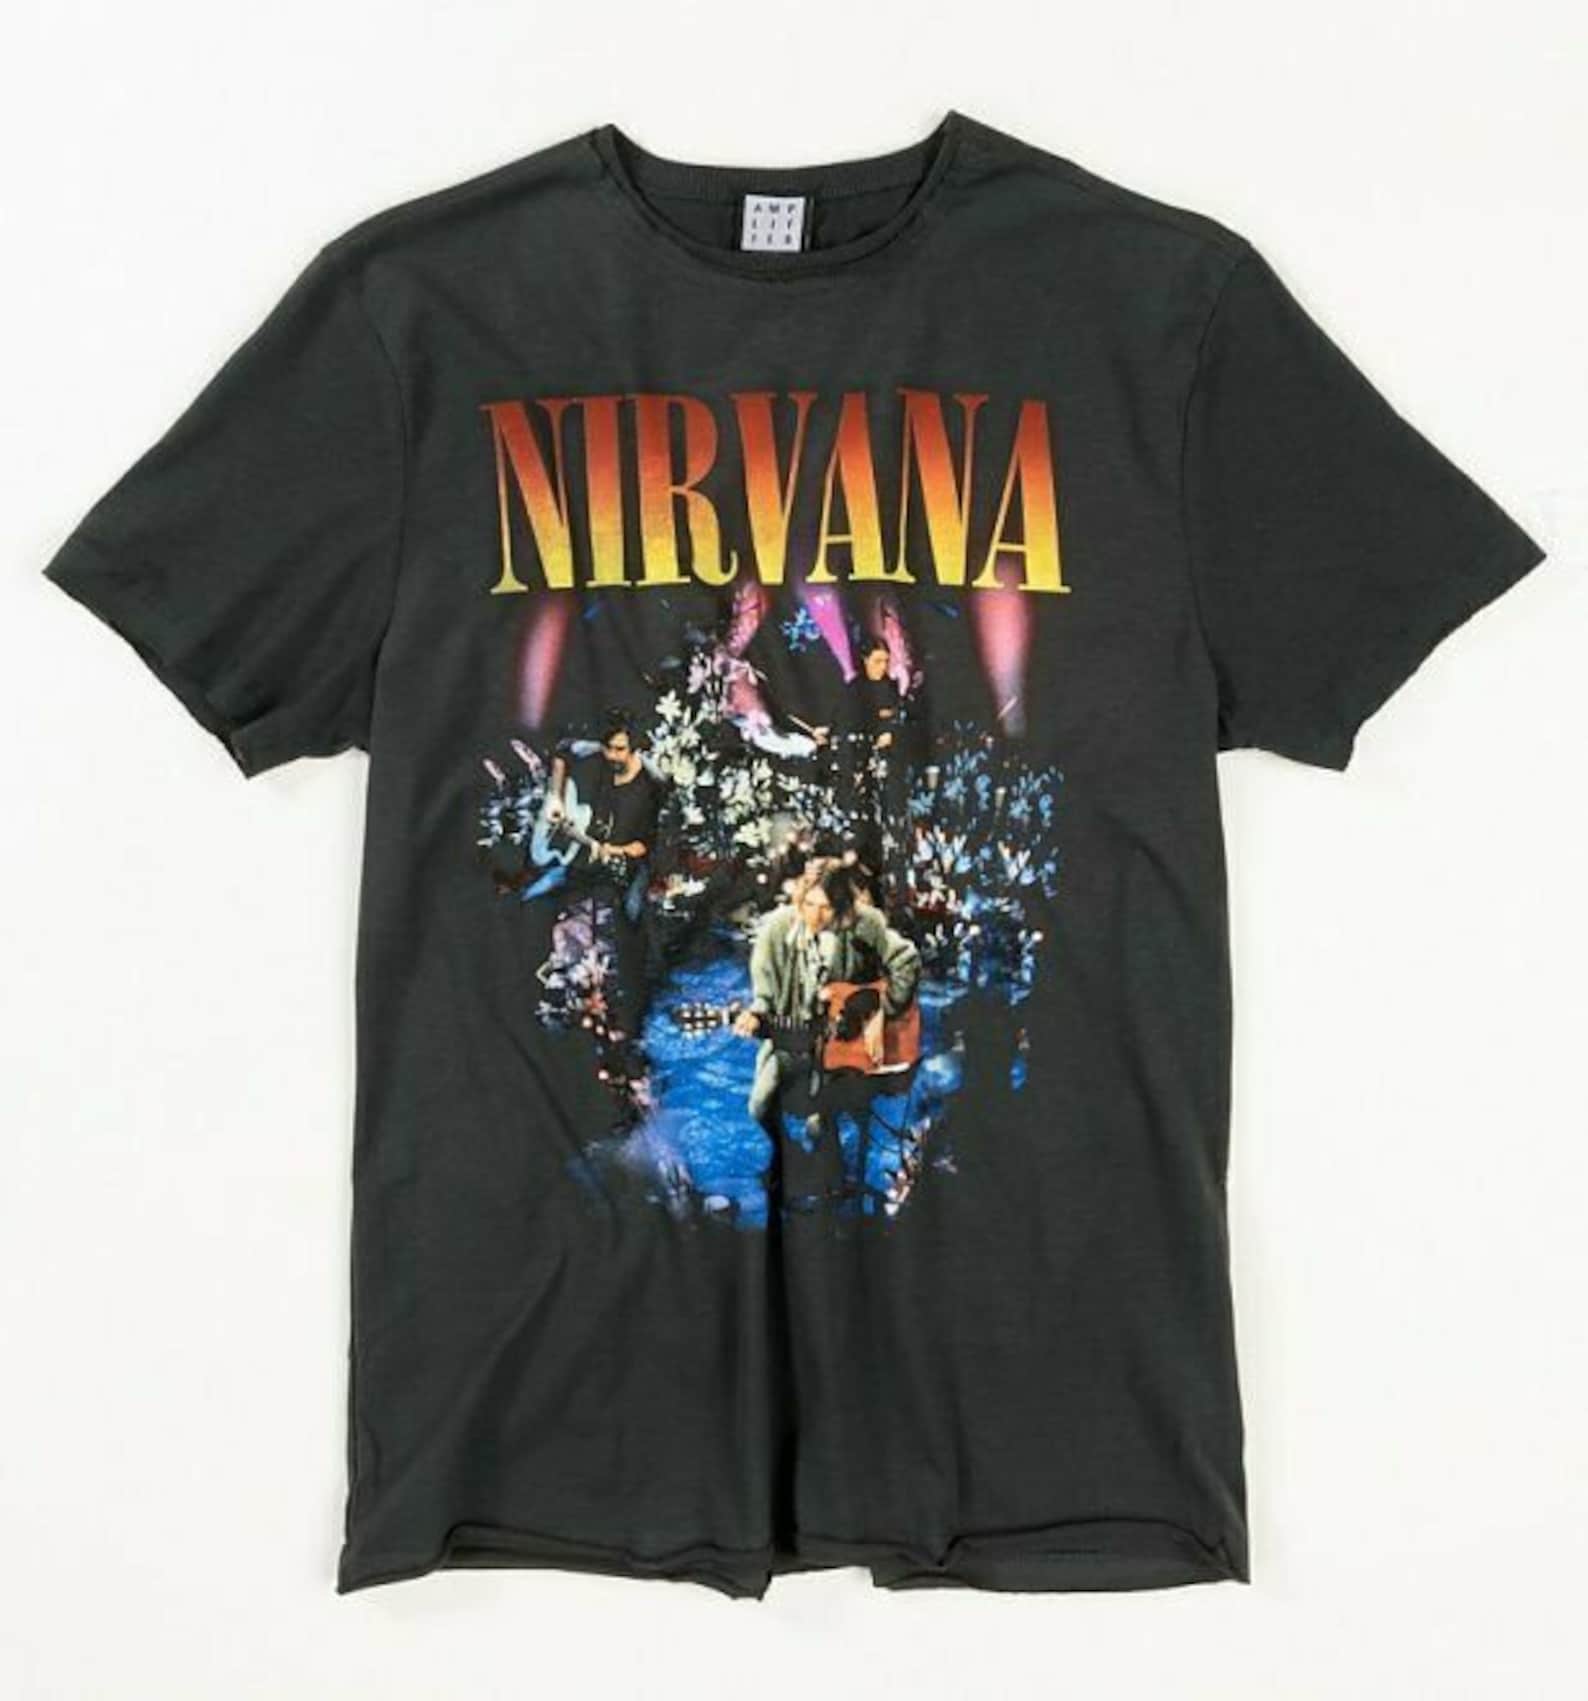 Nirvana mtv unplugged. Футболка Нирвана MTV. Nirvana MTV Unplugged футболка. Нирвана мерч. Футболка Nirvana 90 годов.